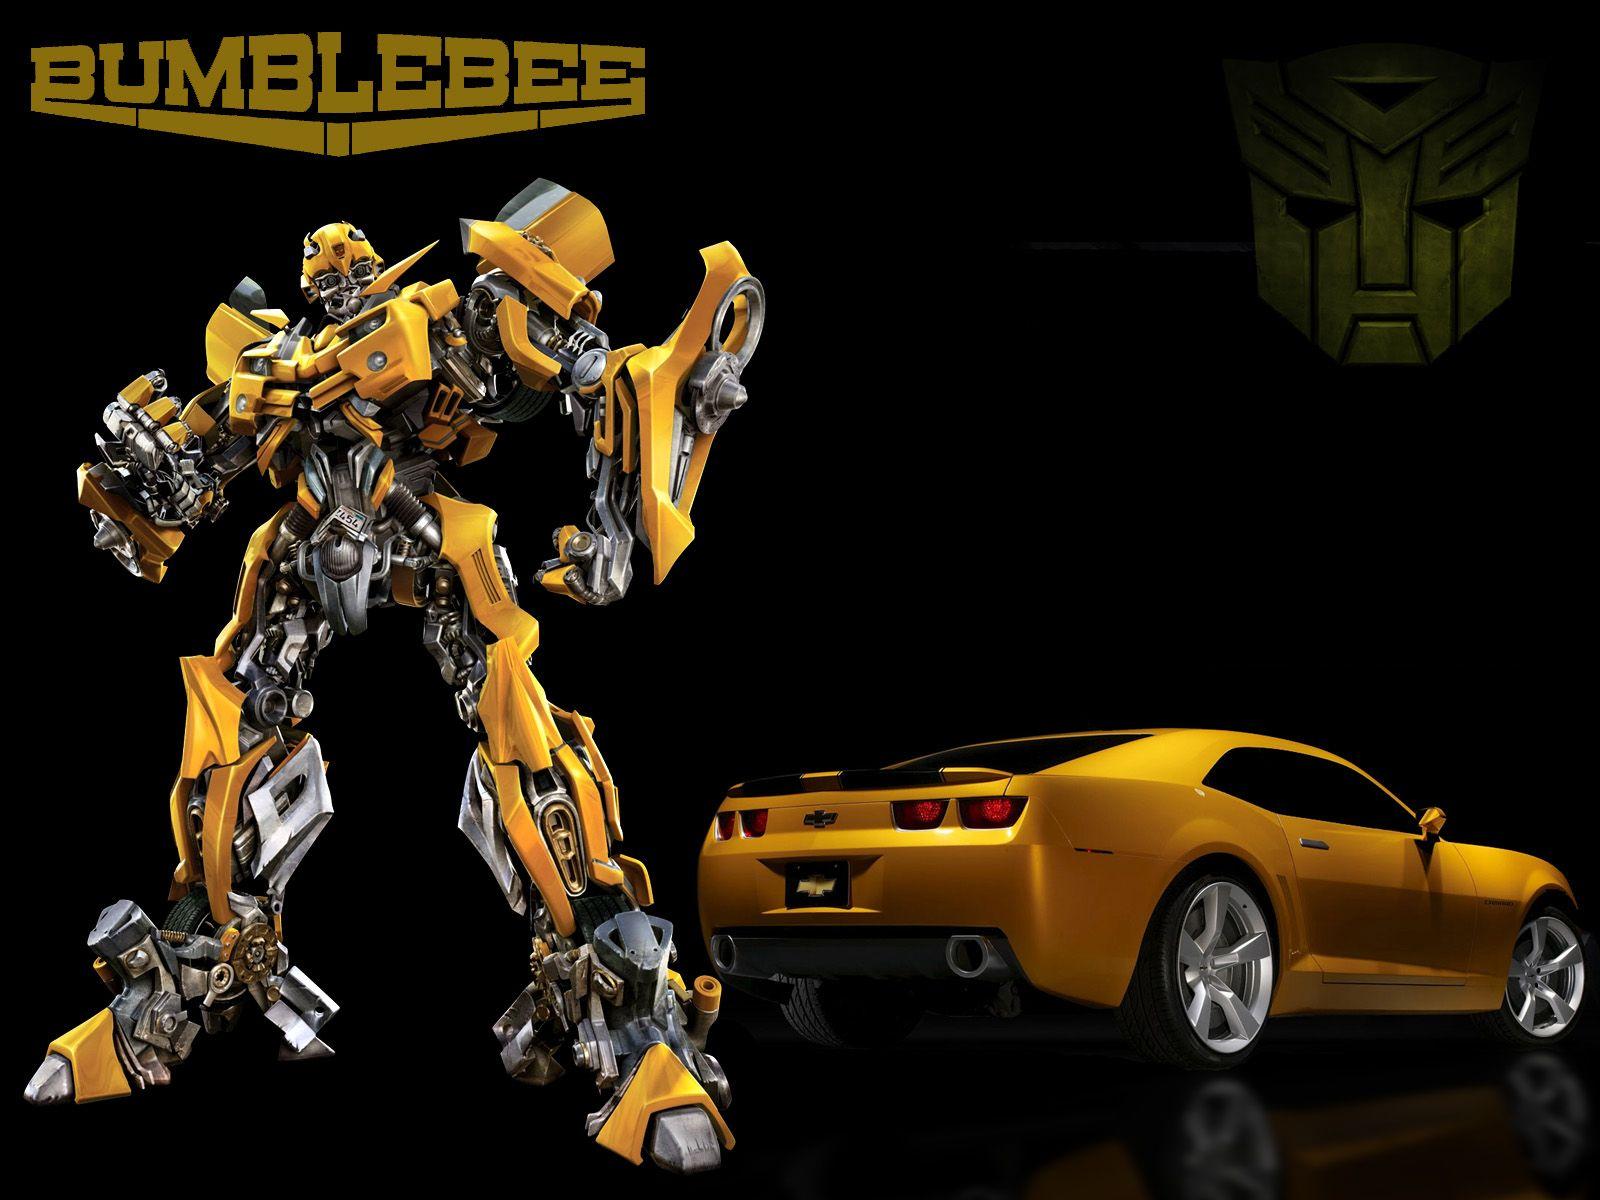 Free 3D Wallpaper Download: Transformers wallpaper, transformer